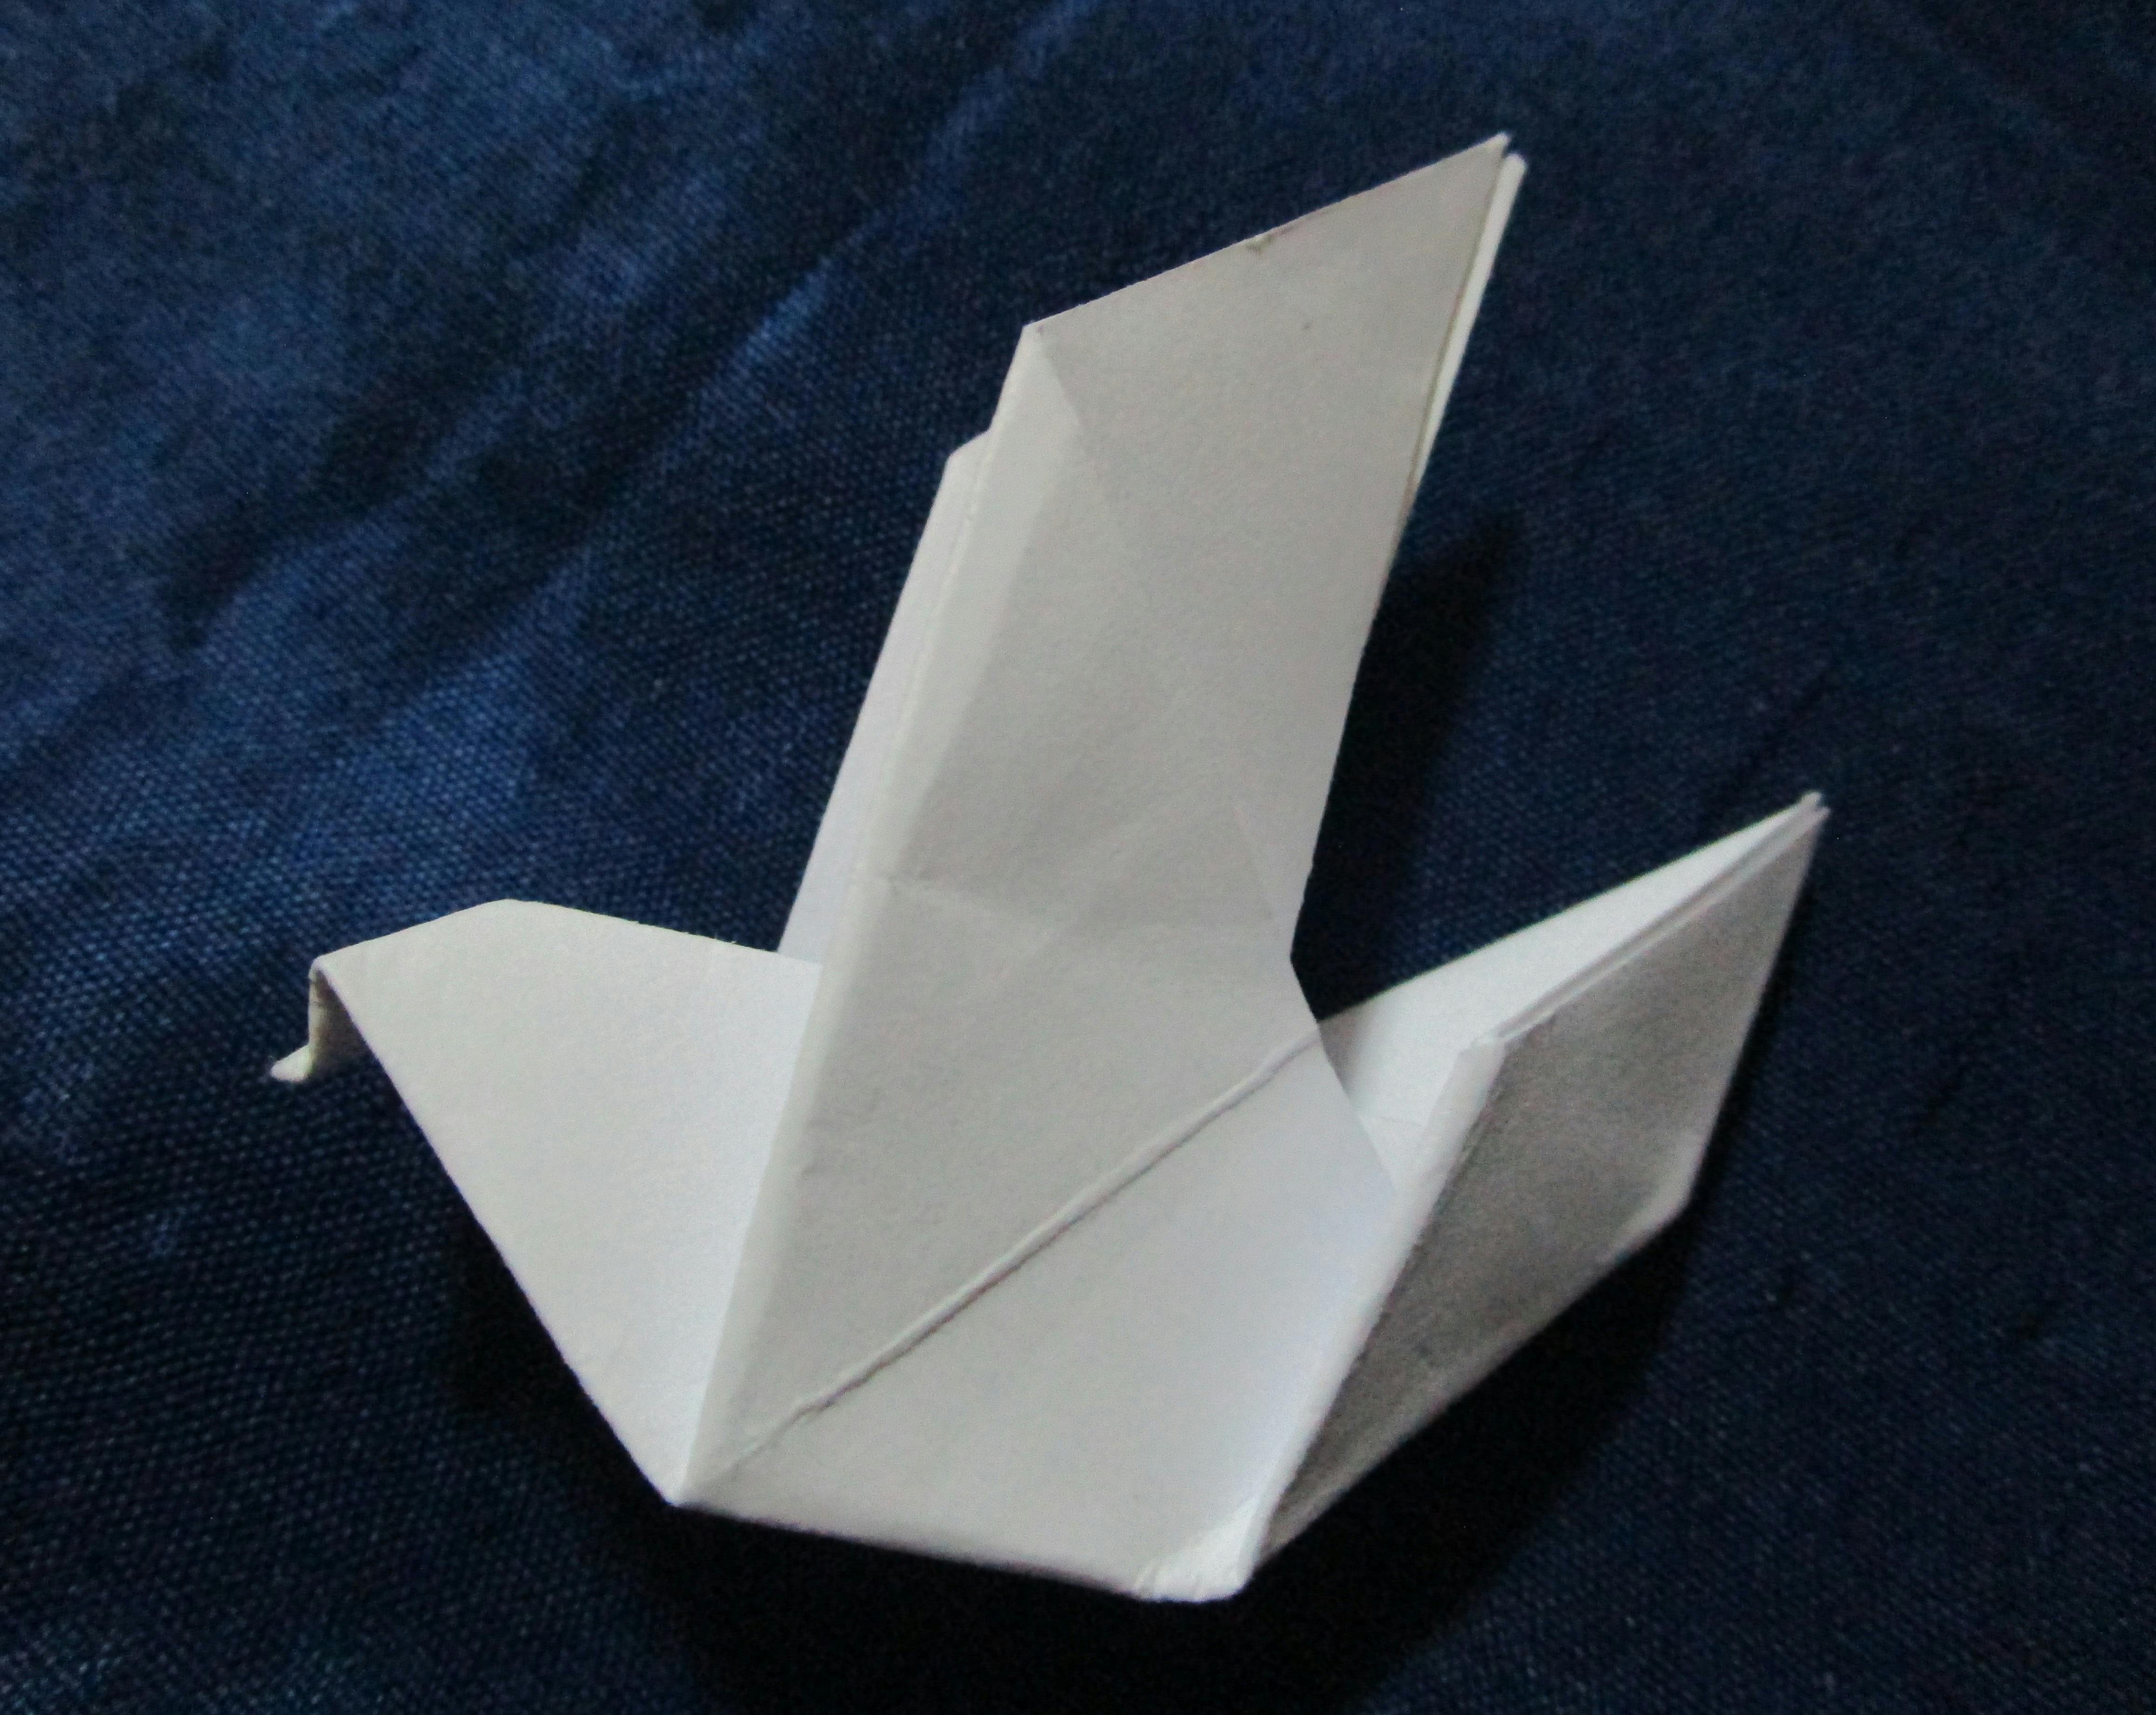 Free stock photo of origami bird paper folding art white blue simple